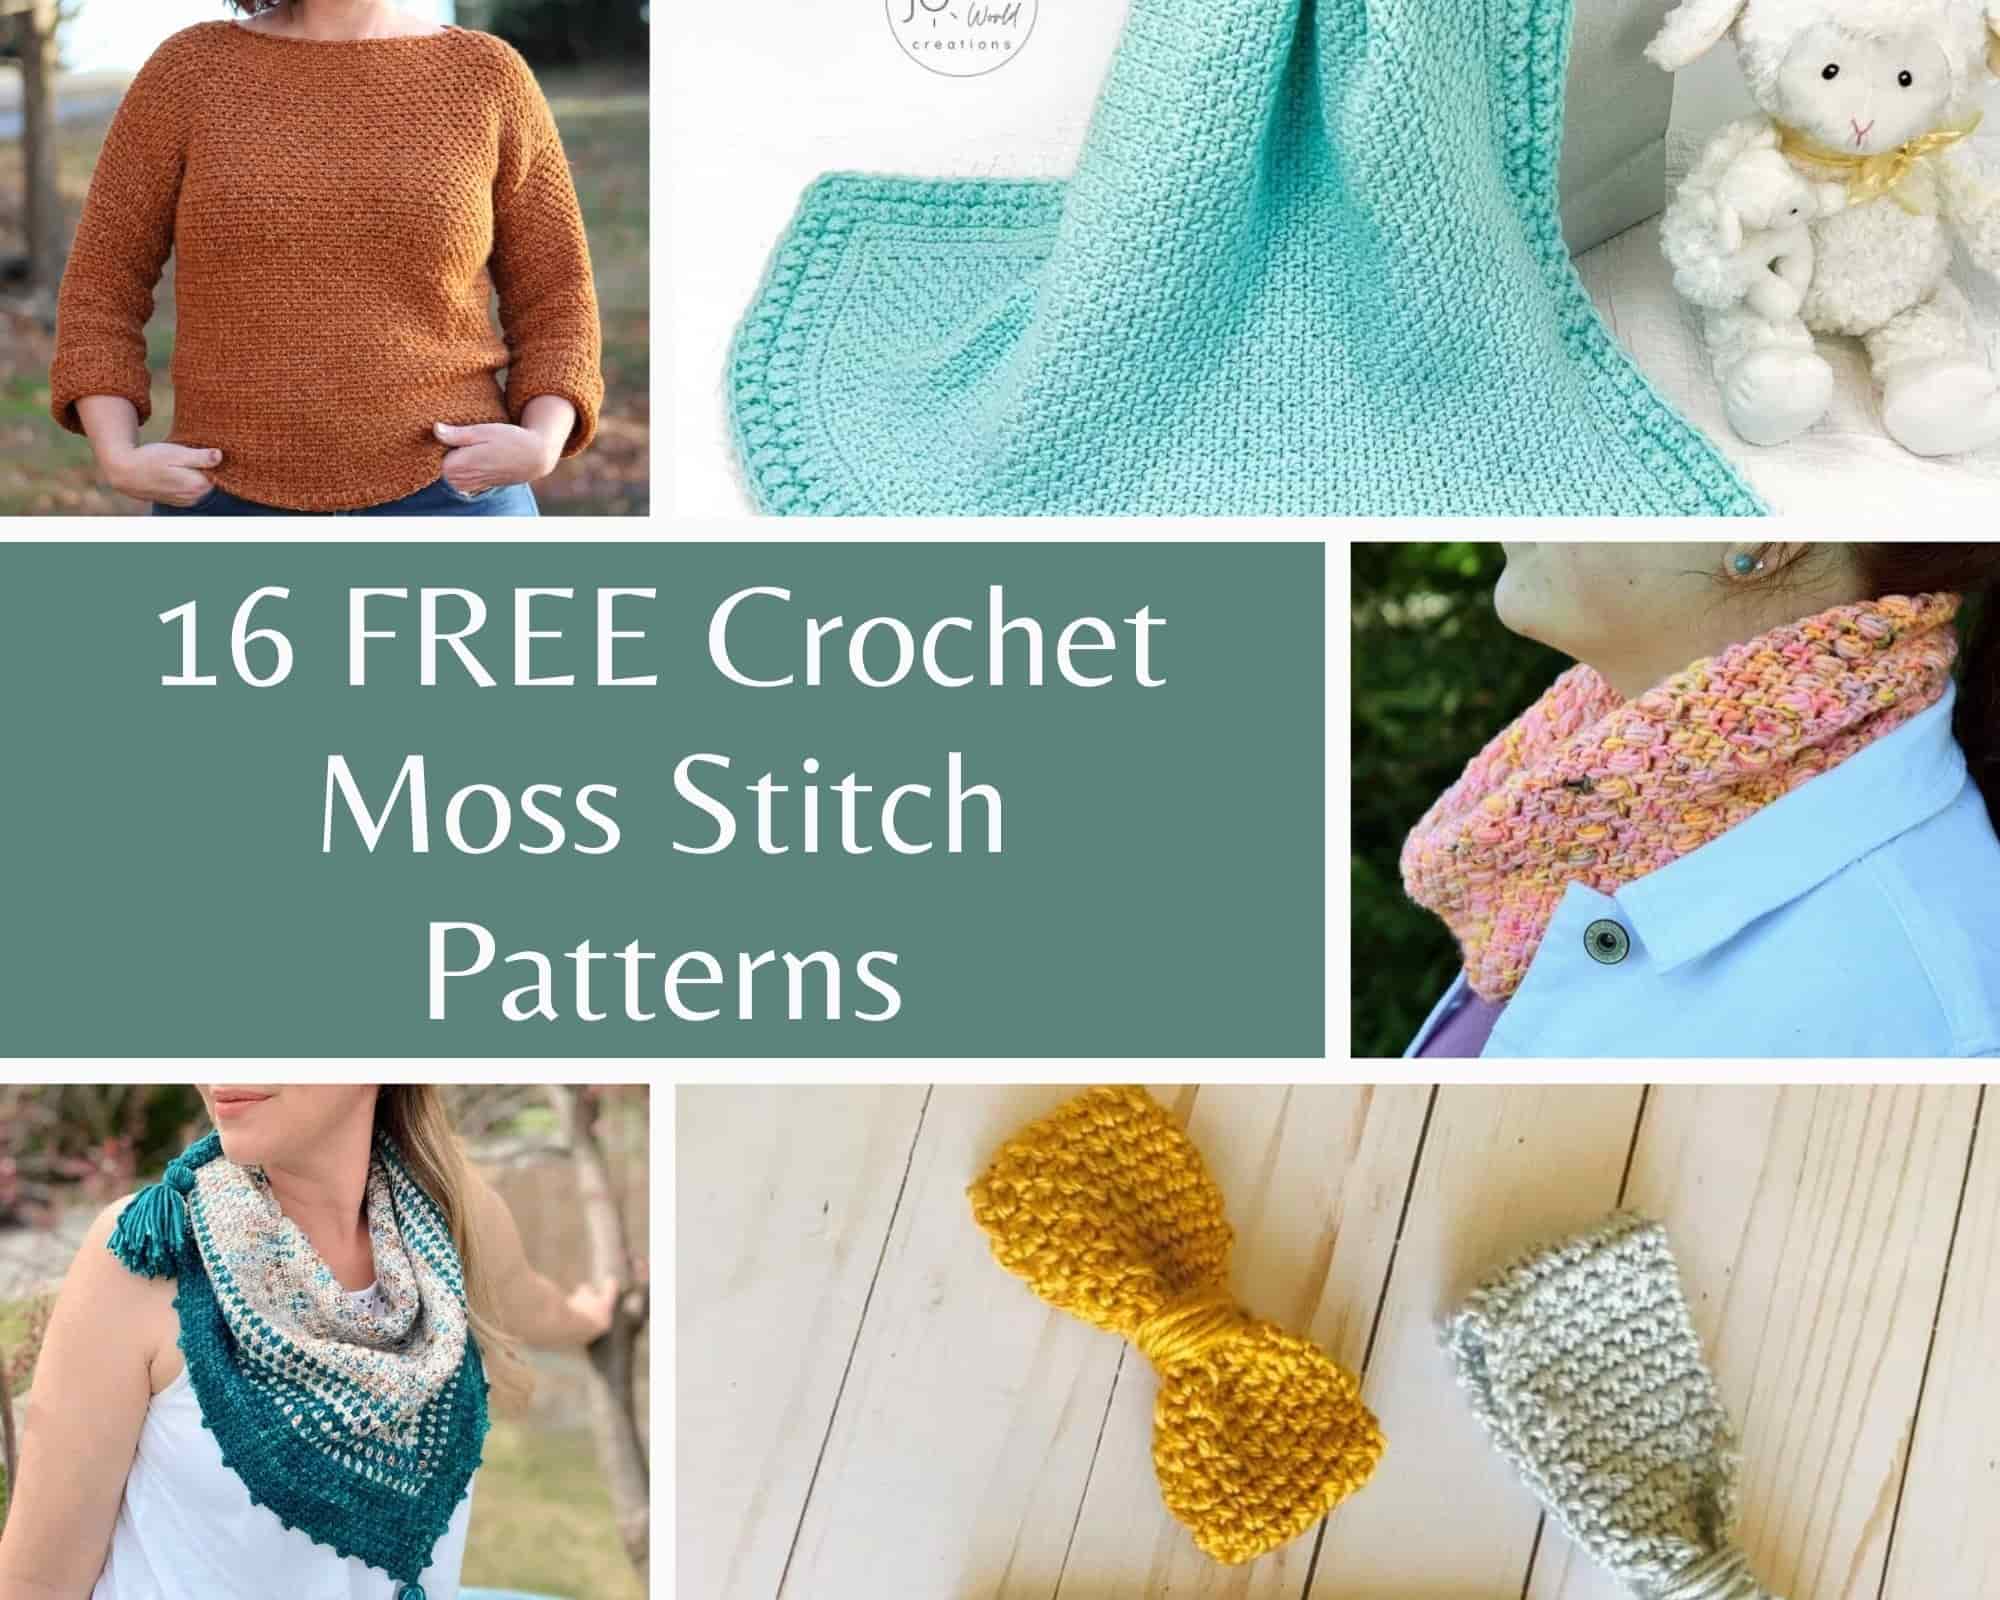 16 Free Moss Stitch Crochet Patterns - Made by Gootie